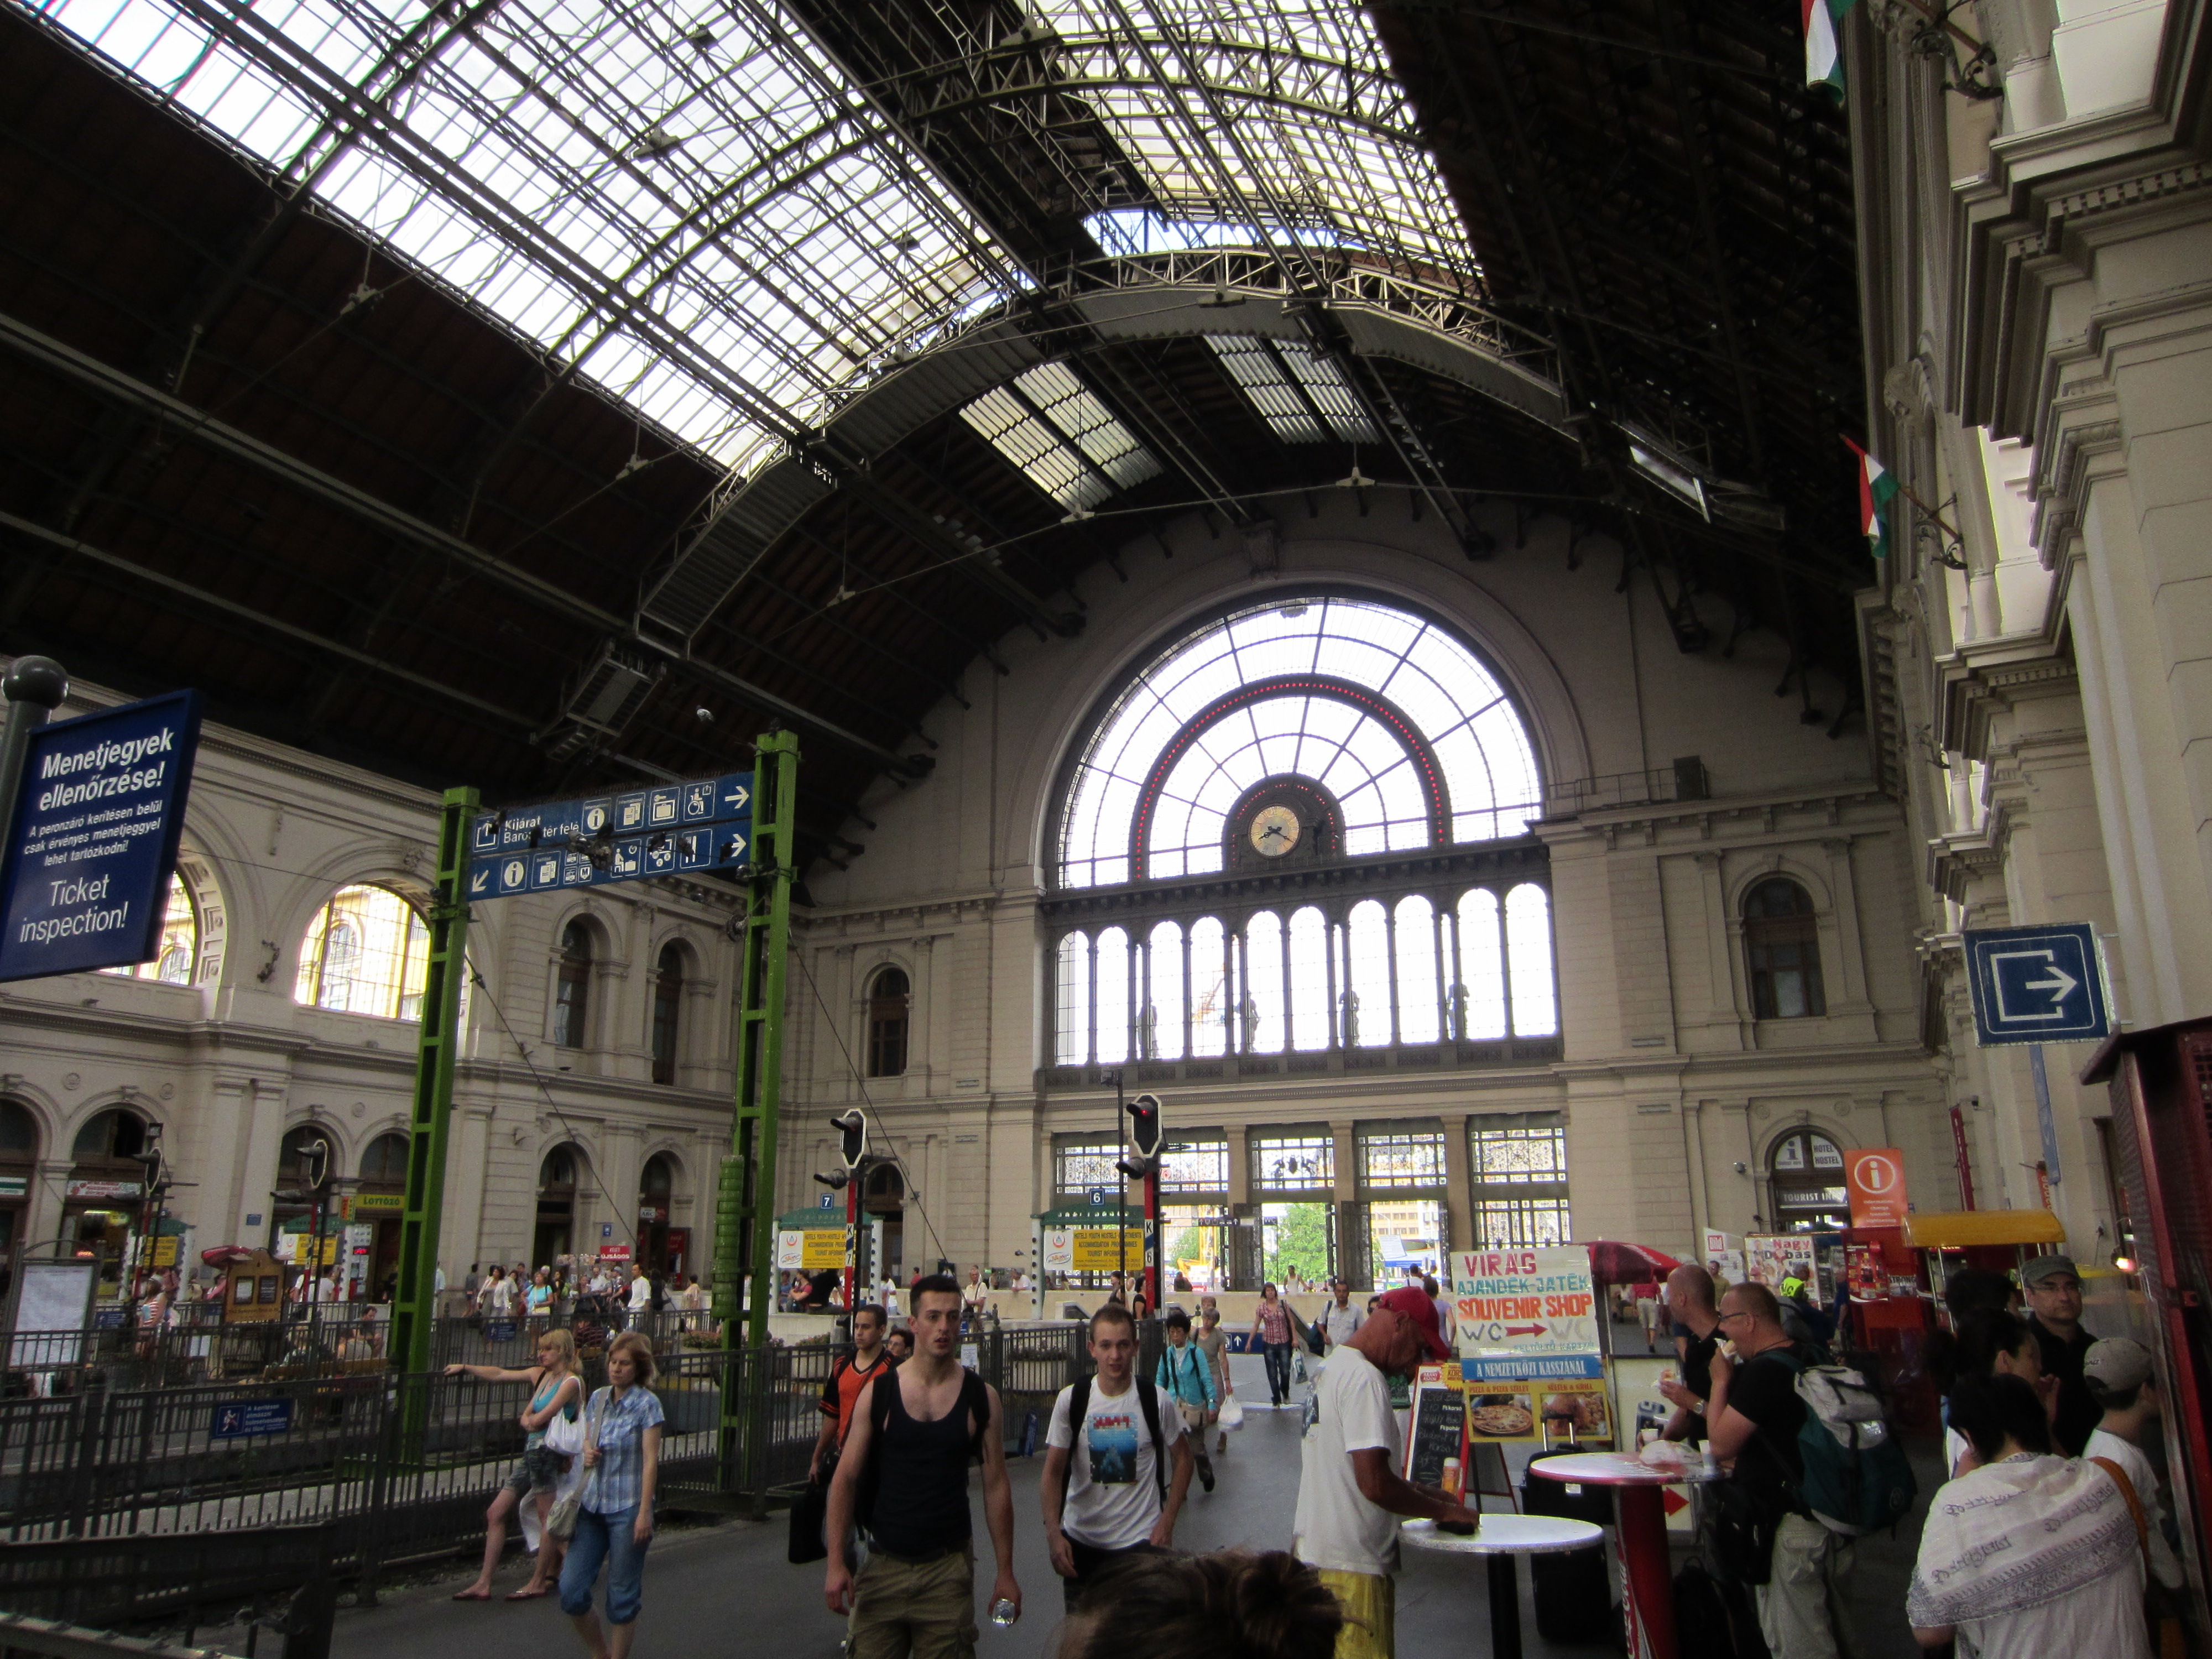 Budapest-Keleti Railway Terminal – Not Your Average Engineer